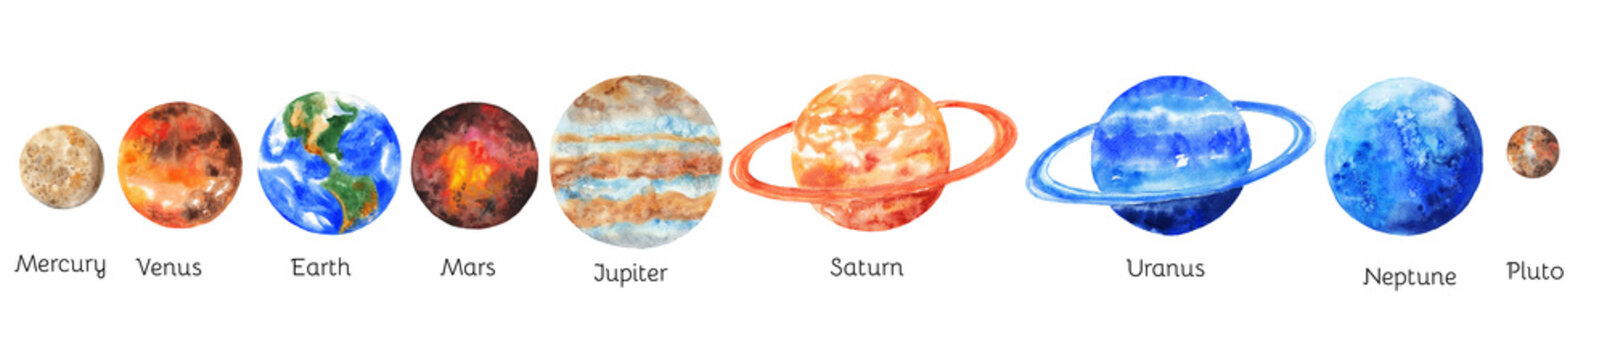 The planets of the Solar system on white background. Mercury, Venus, Earth, Mars, Jupiter, Saturn, Uranus, Neptune, Pluto. Watercolor illustration